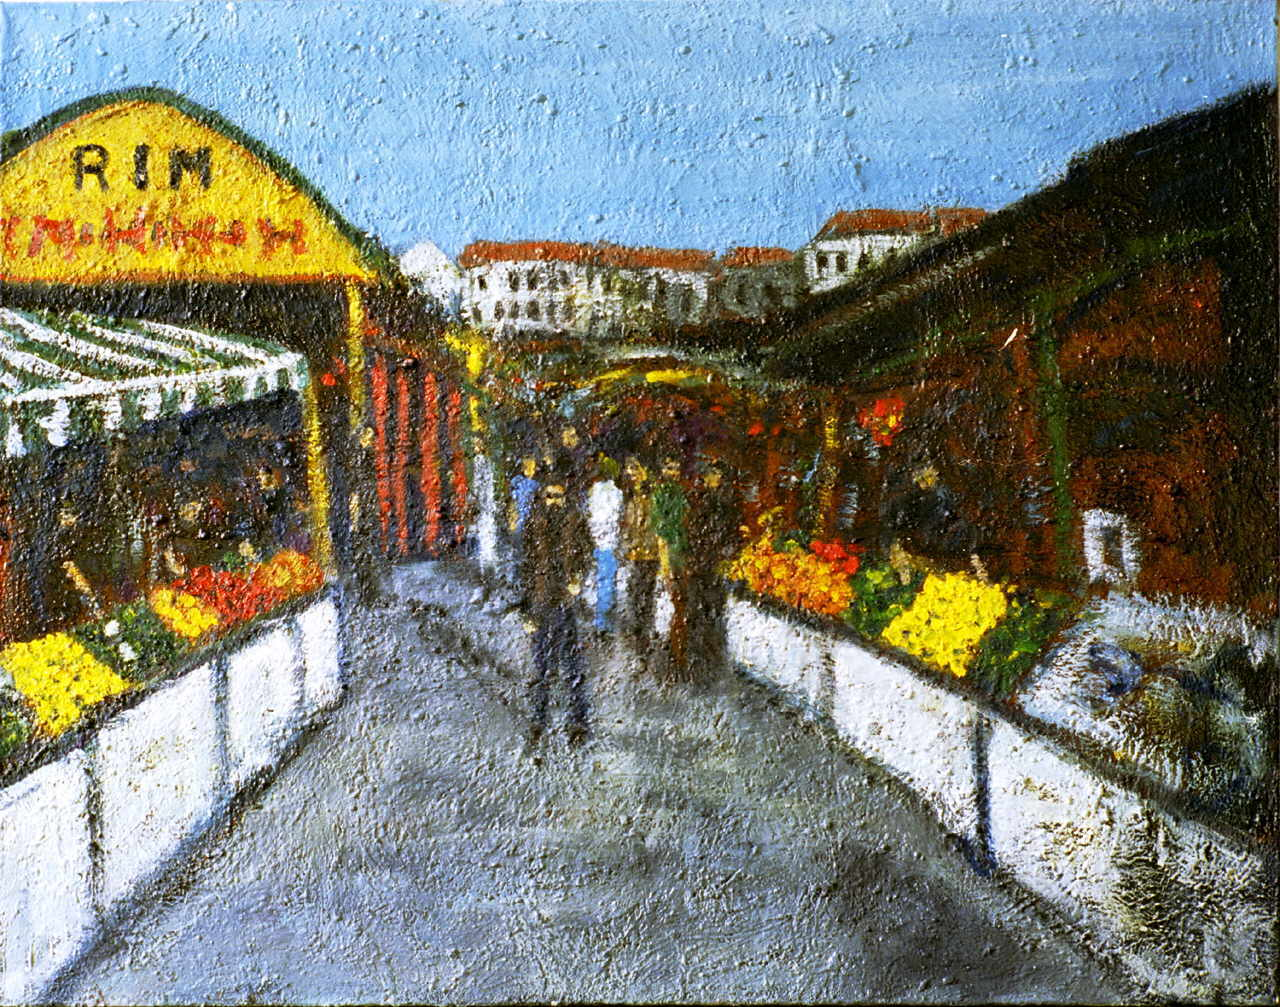 Melichar Ferdinand 
"Marktplatz", 2002
oil / canvas
120 x 150 cm